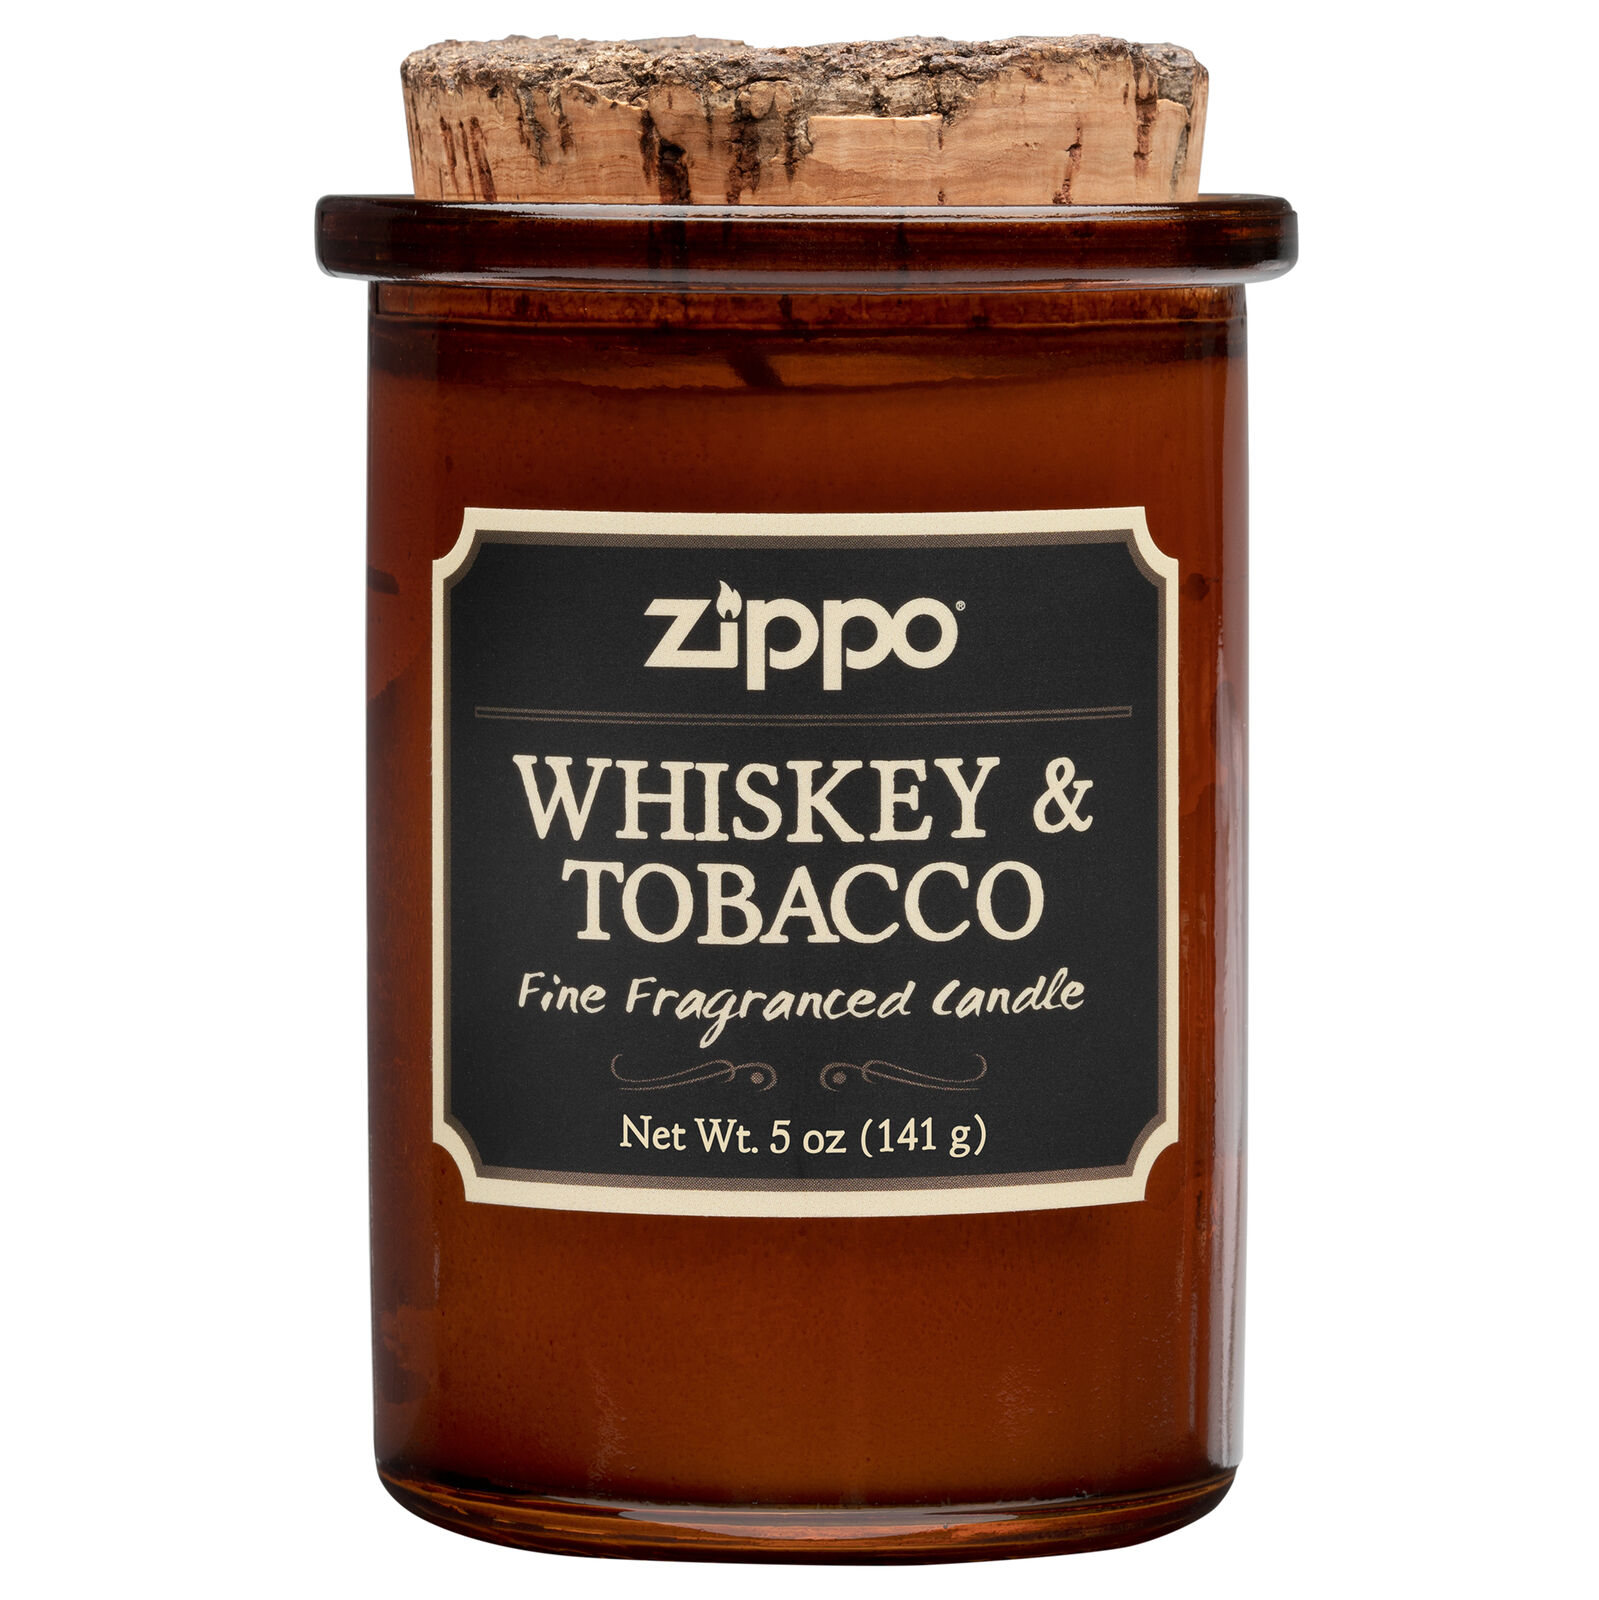 Zippo Spirit Candle - Whiskey & Tobacco, 70006, New Condition (5 oz. jar)